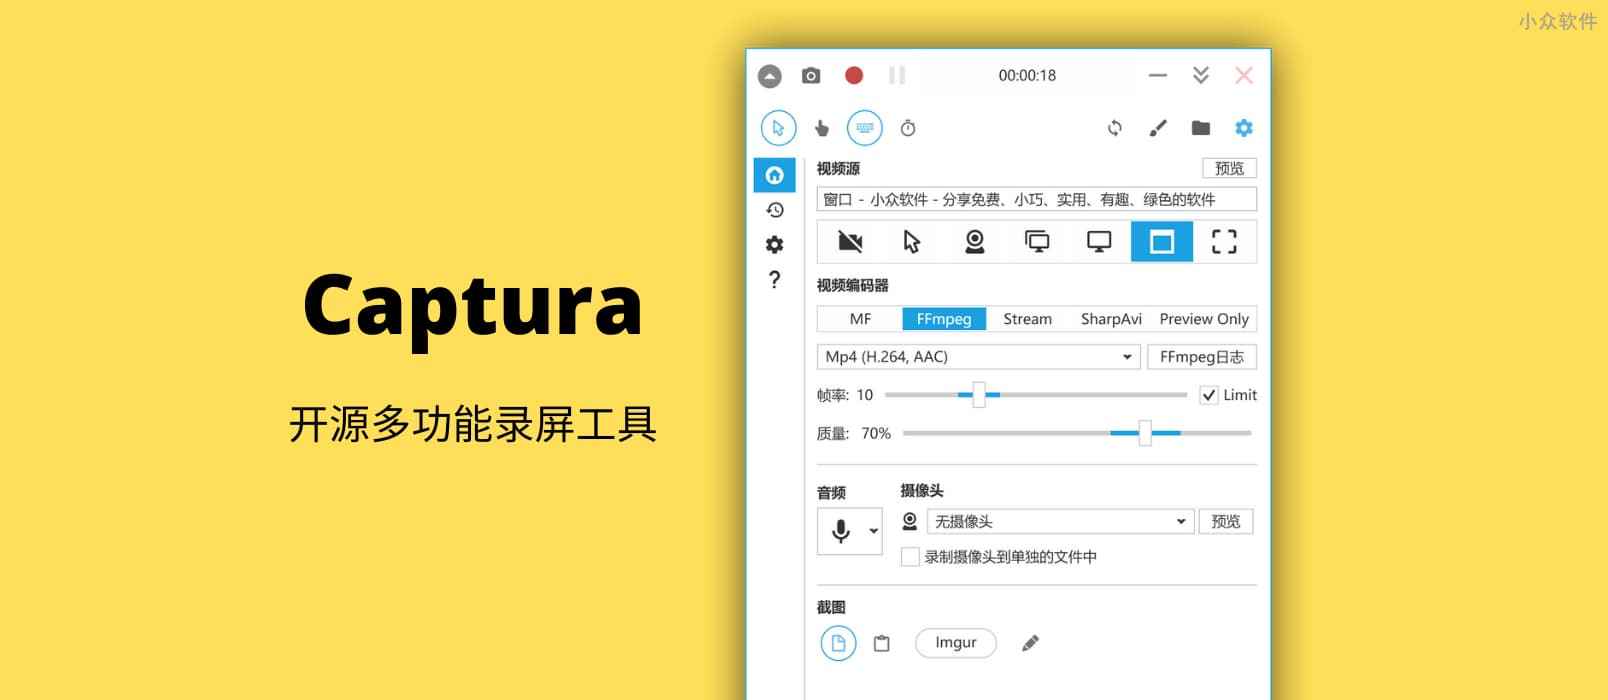 Captura - 带键盘按键录制的录屏工具，支持直播[Windows] 1